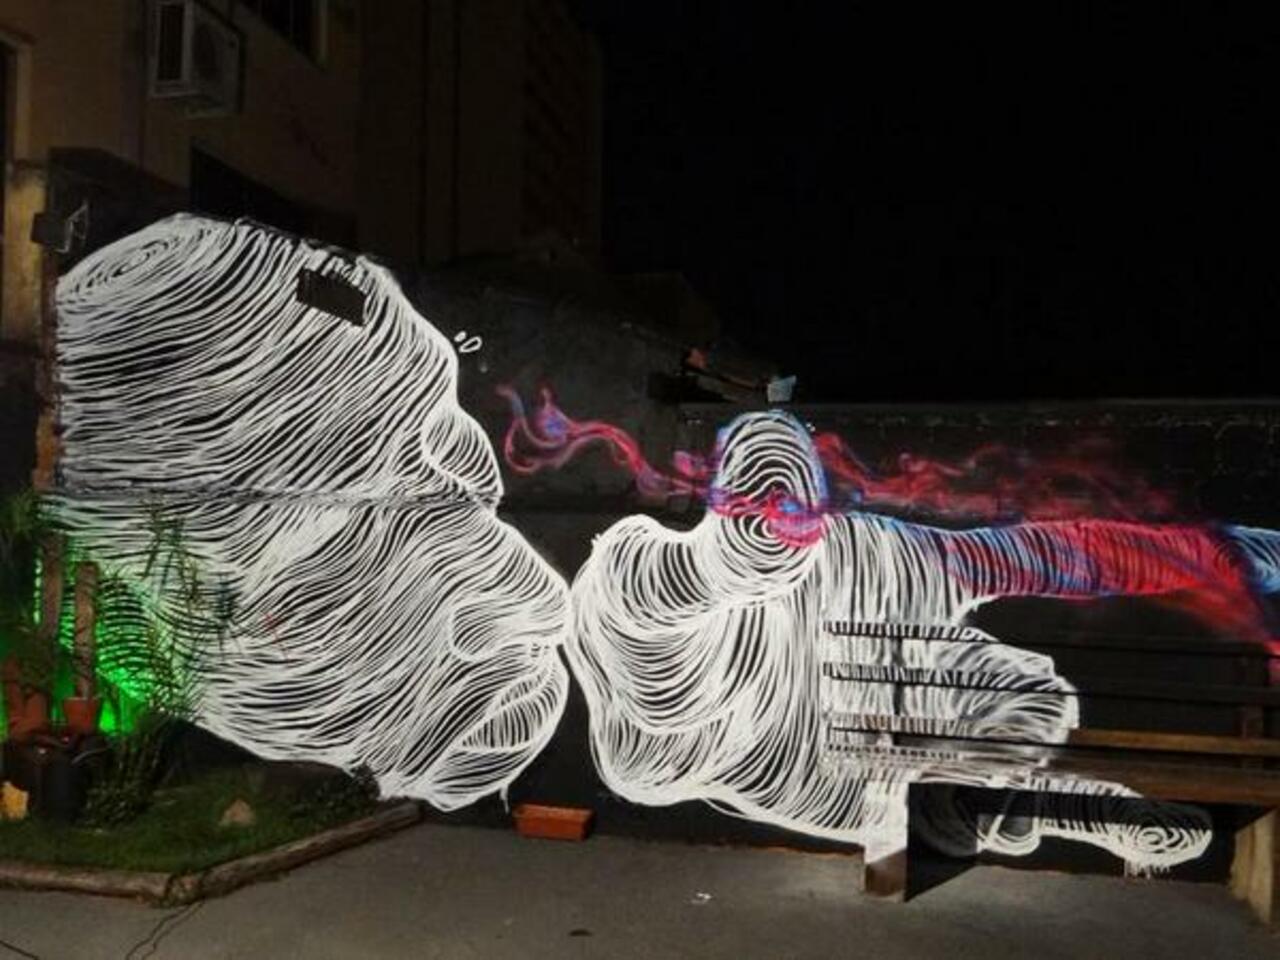 “@iIusionOptica: Gran trabajo del artista Cain.
São Paolo, Brasil
#art #streetart #mural #graffiti http://t.co/GRWZ8bWBAf”ah man #NoWords